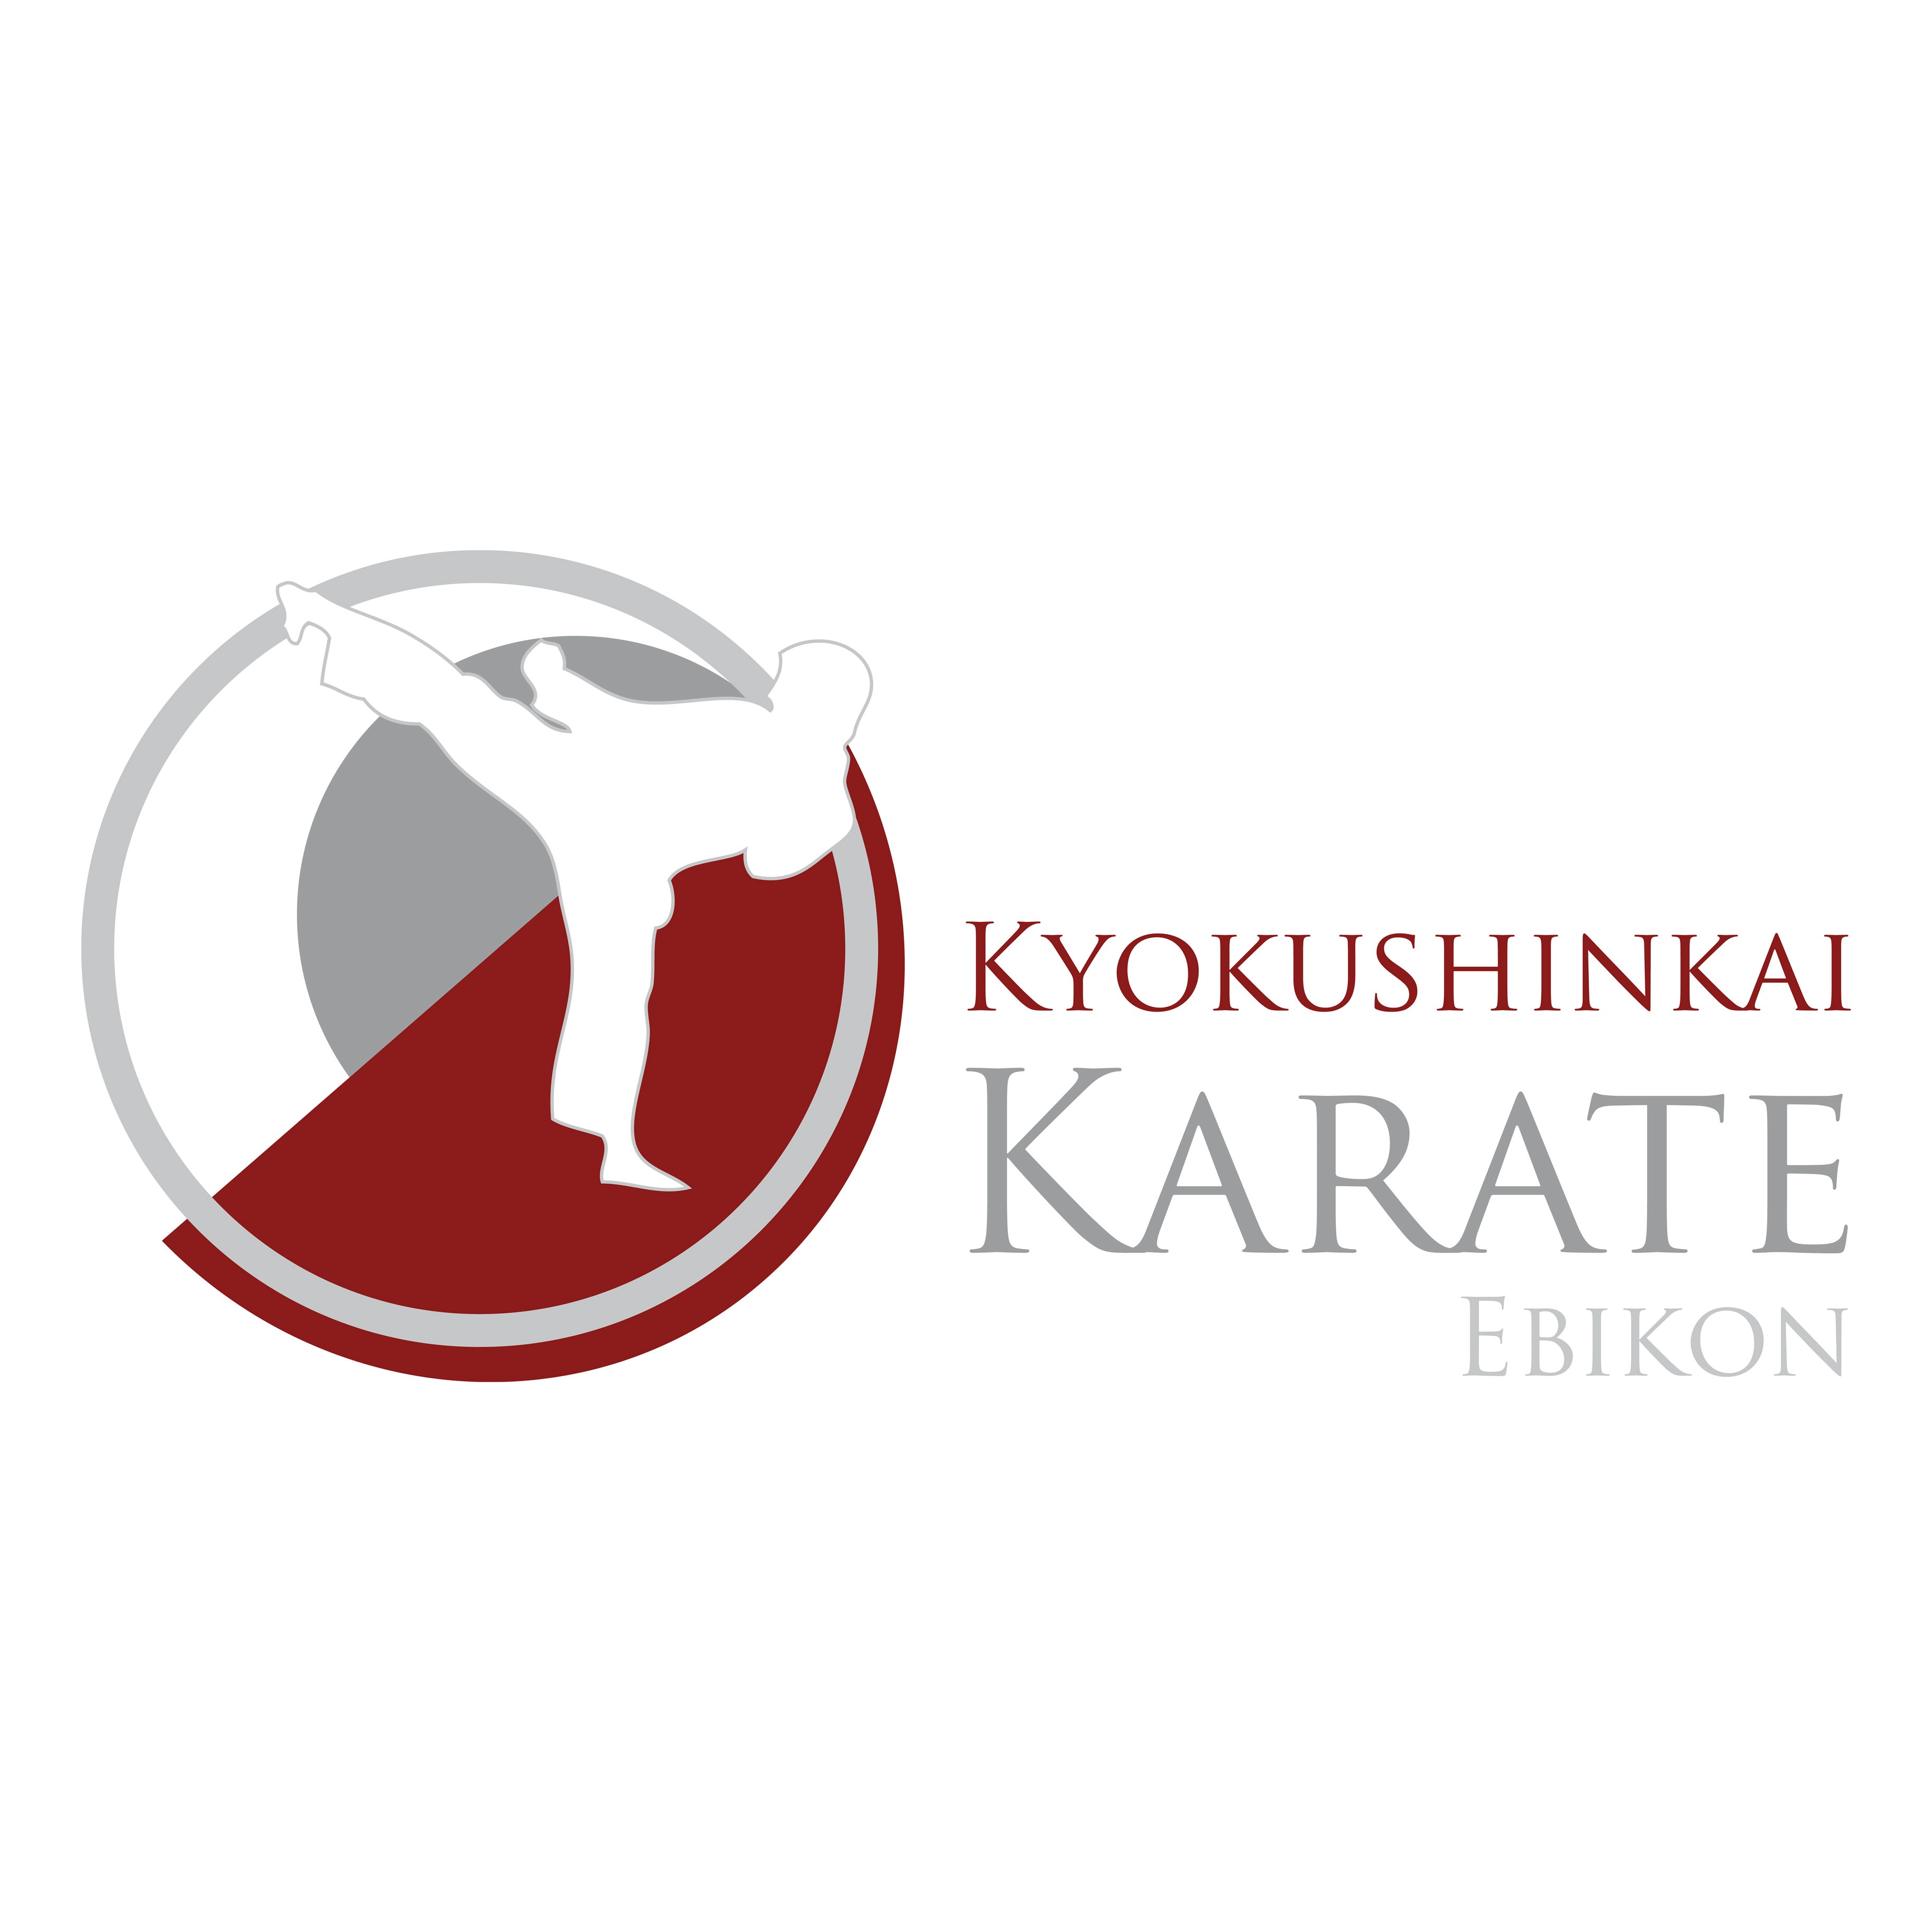 Kyokushinkai Karate Ebikon Logo